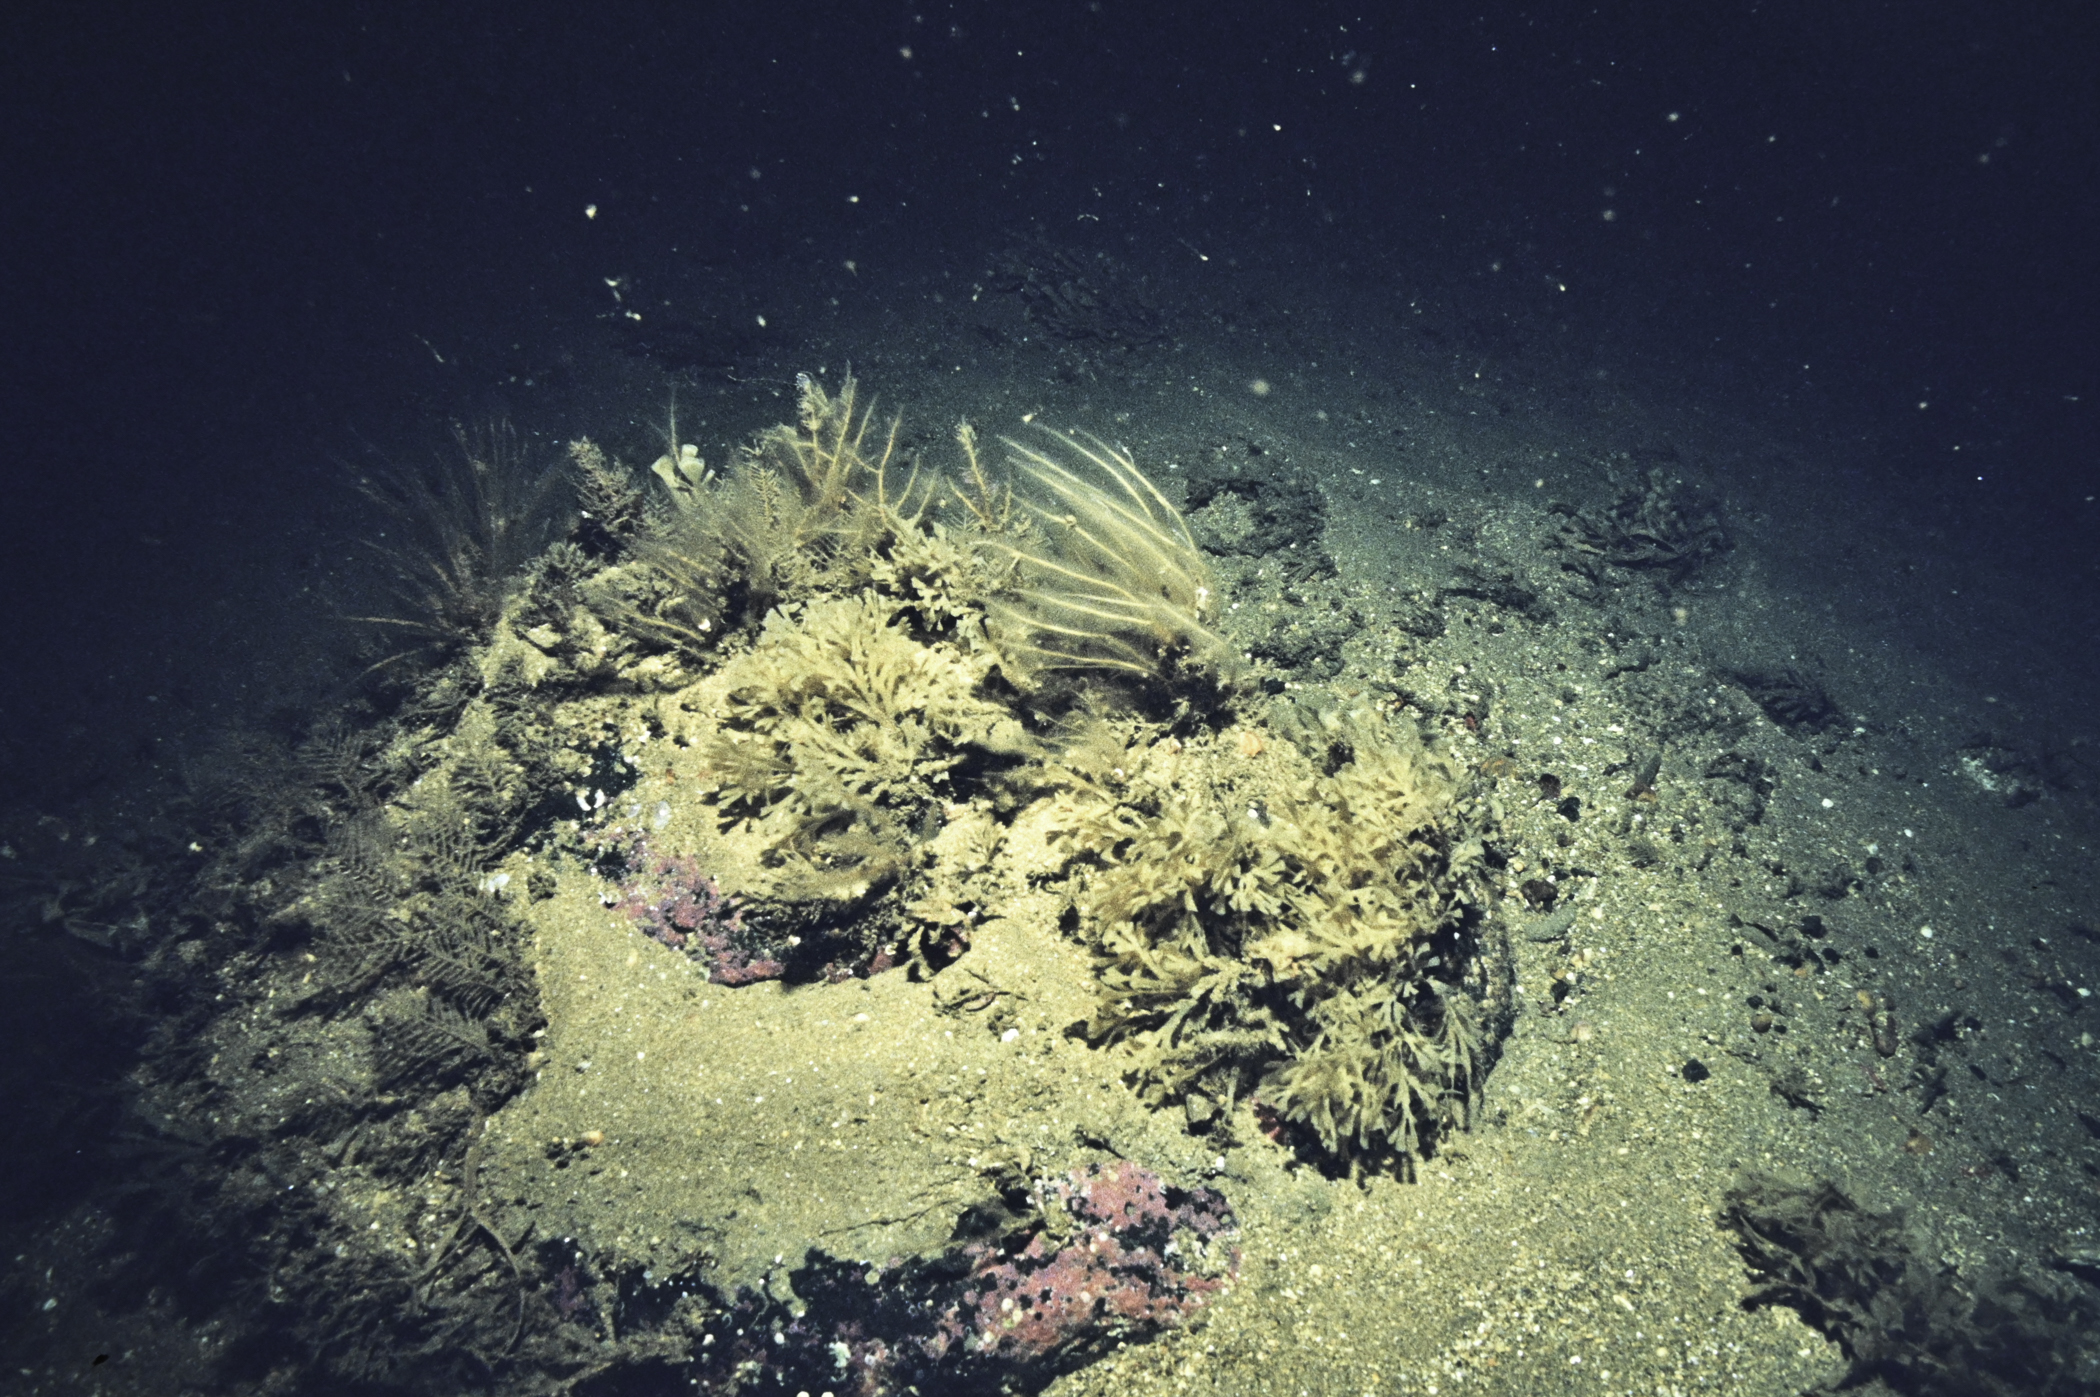 Halecium halecinum, Nemertesia antennina, Flustra foliacea, Securiflustra securifrons. Site: White Cliffs S Coast, Rathlin Island. 